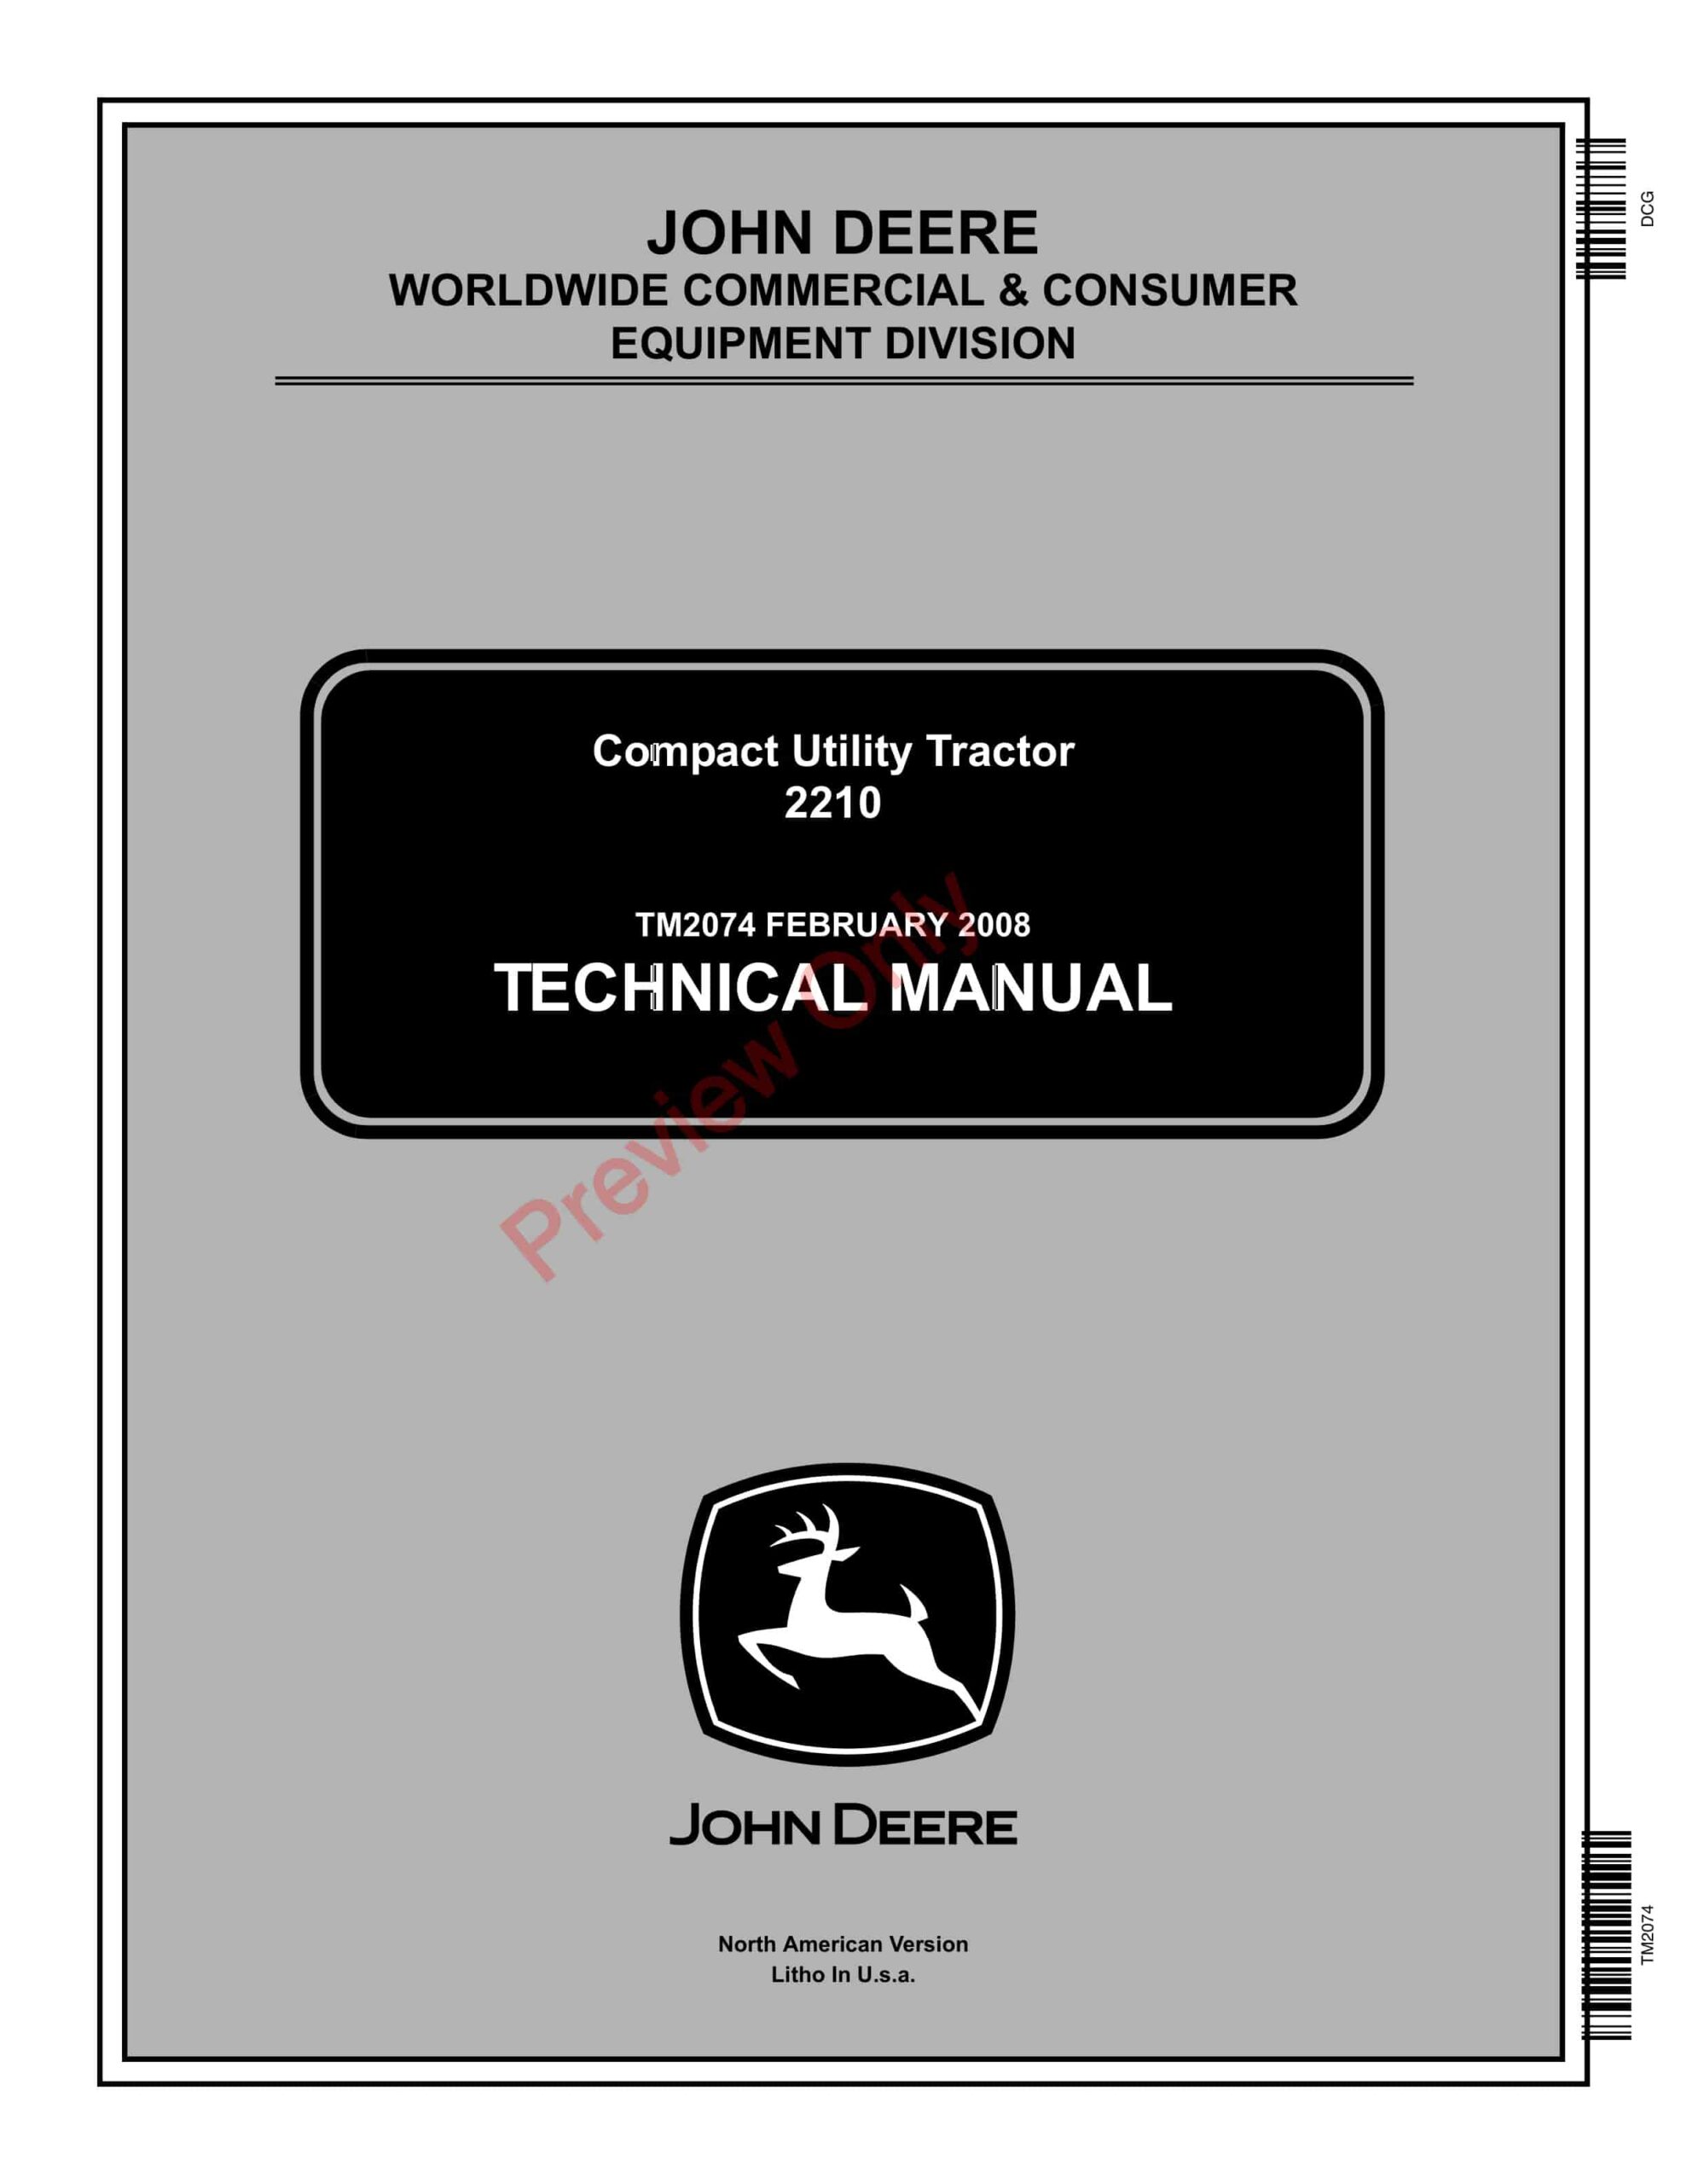 John Deere 2210 Compact Utility Tractor Technical Manual TM2074 01FEB08-1